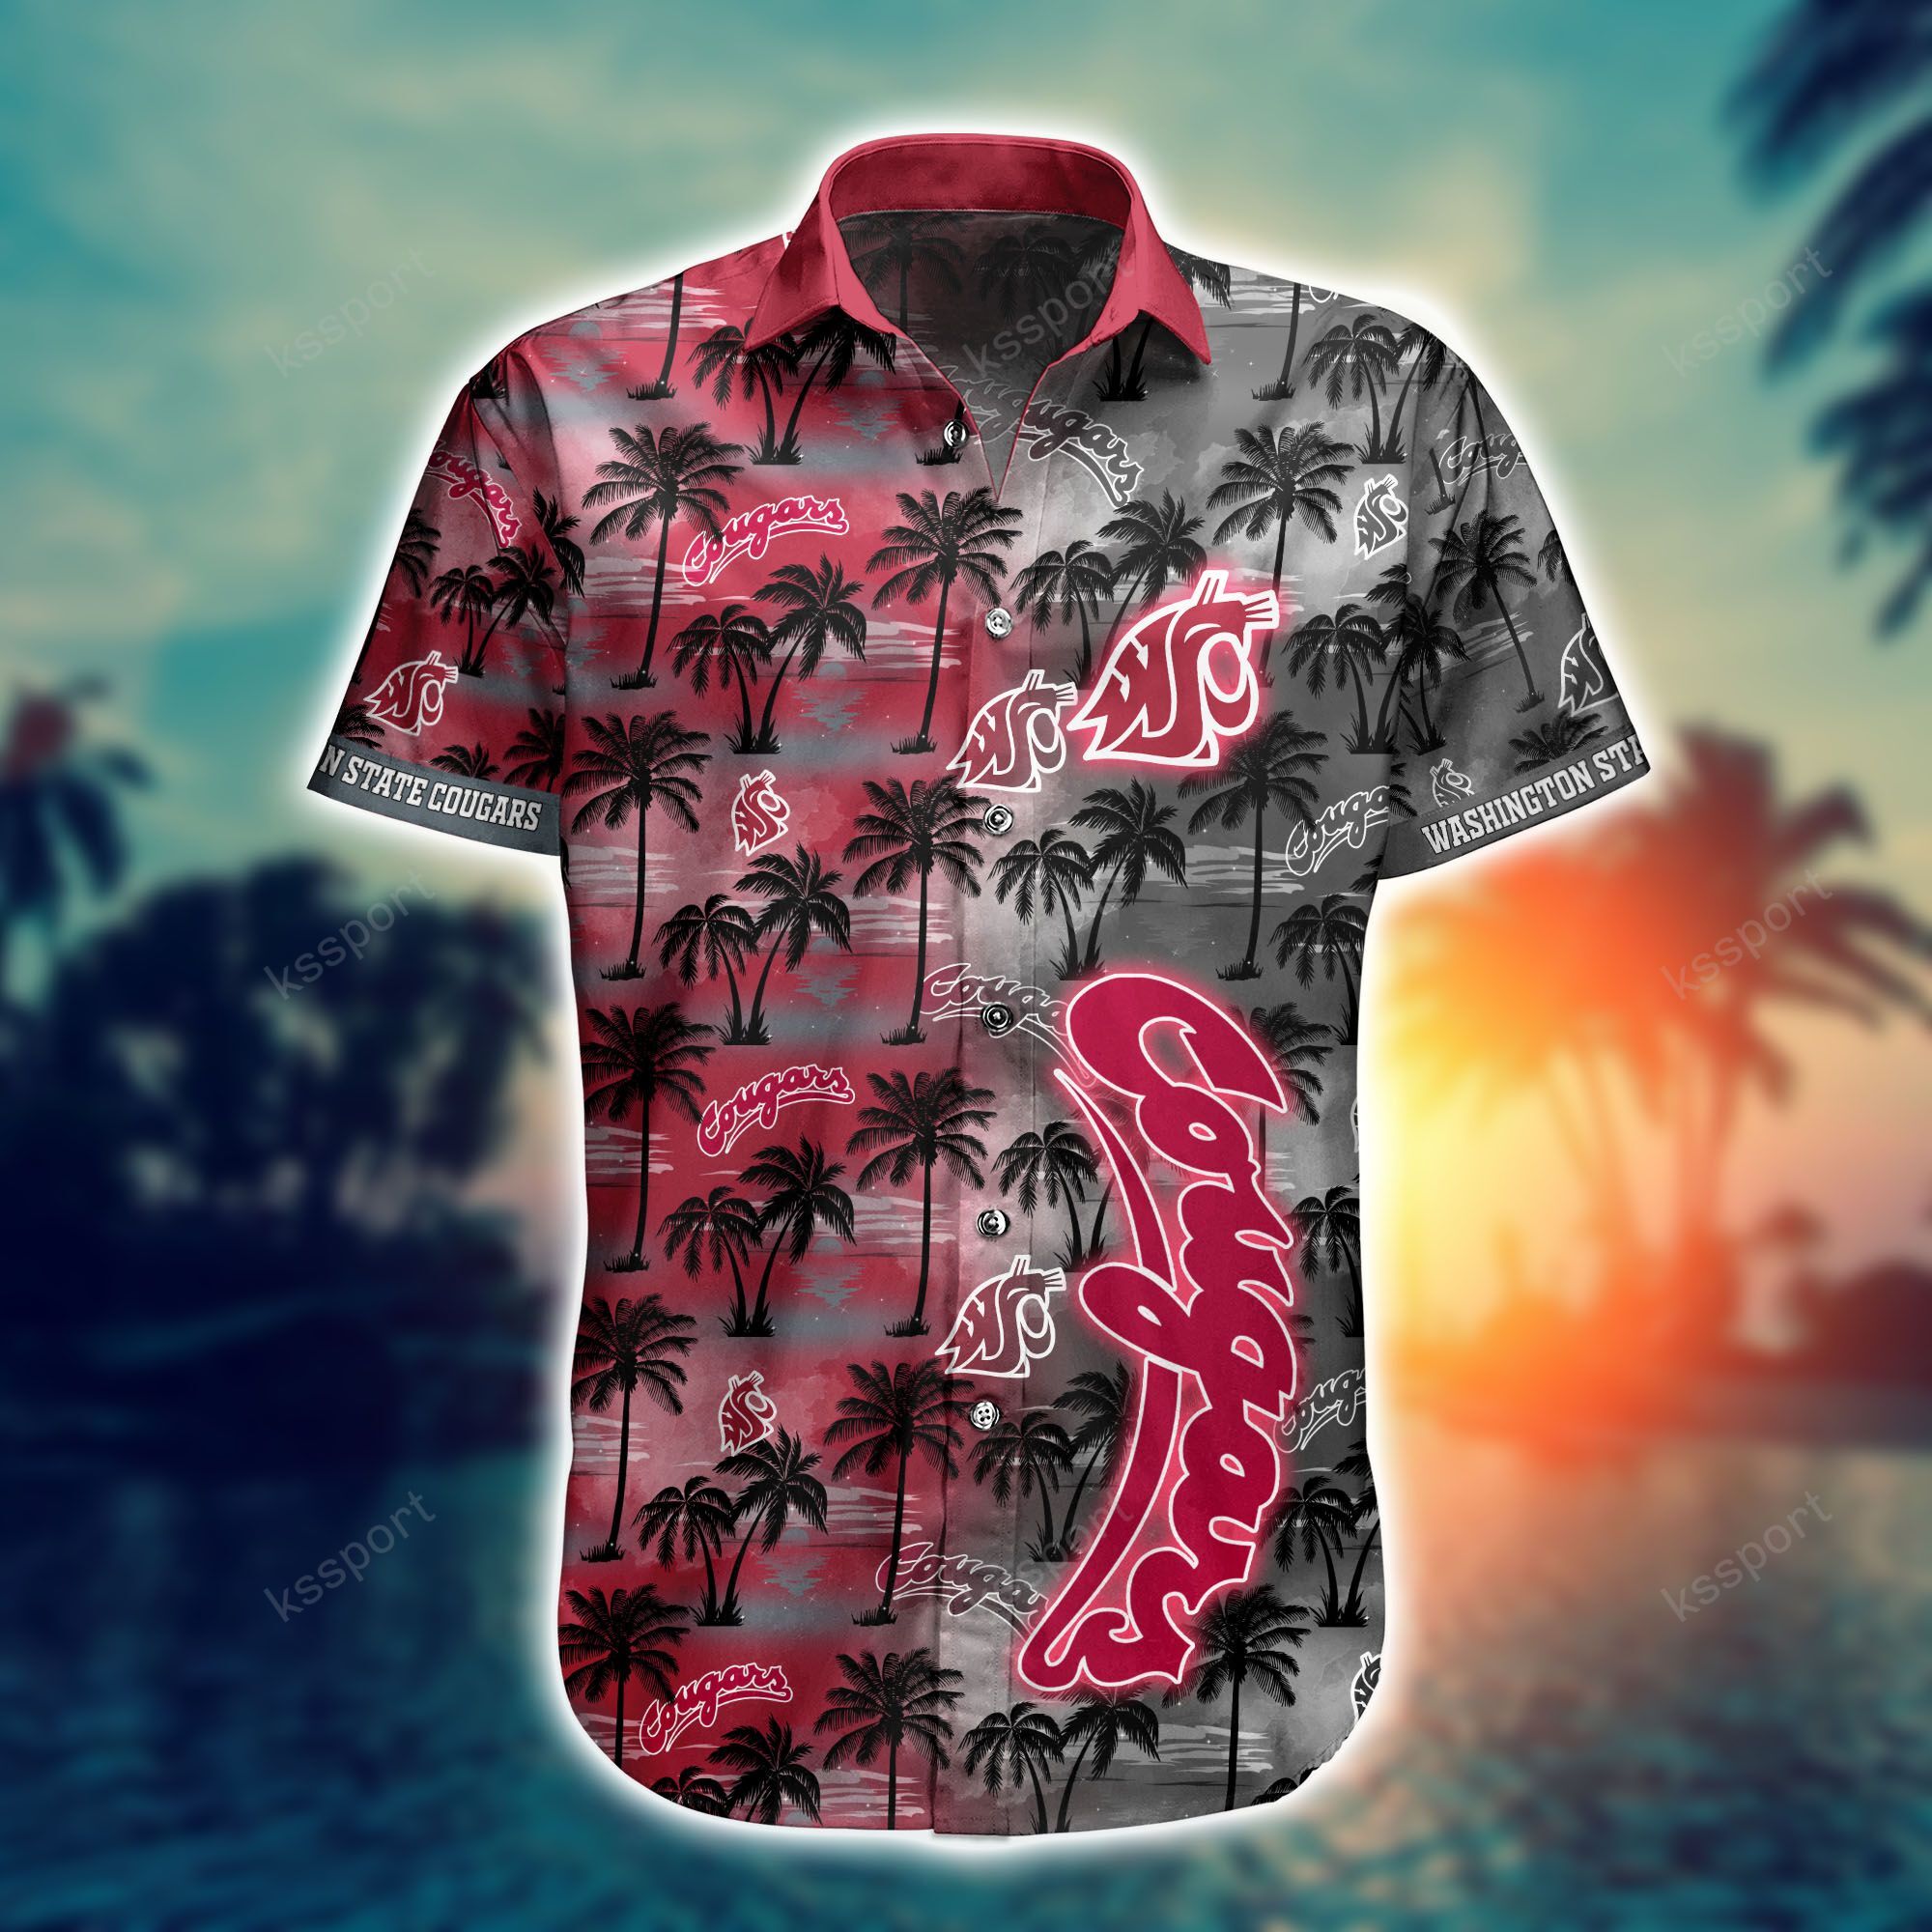 Hawaiian shirt and shorts is a great way to look stylish at a beach party 110